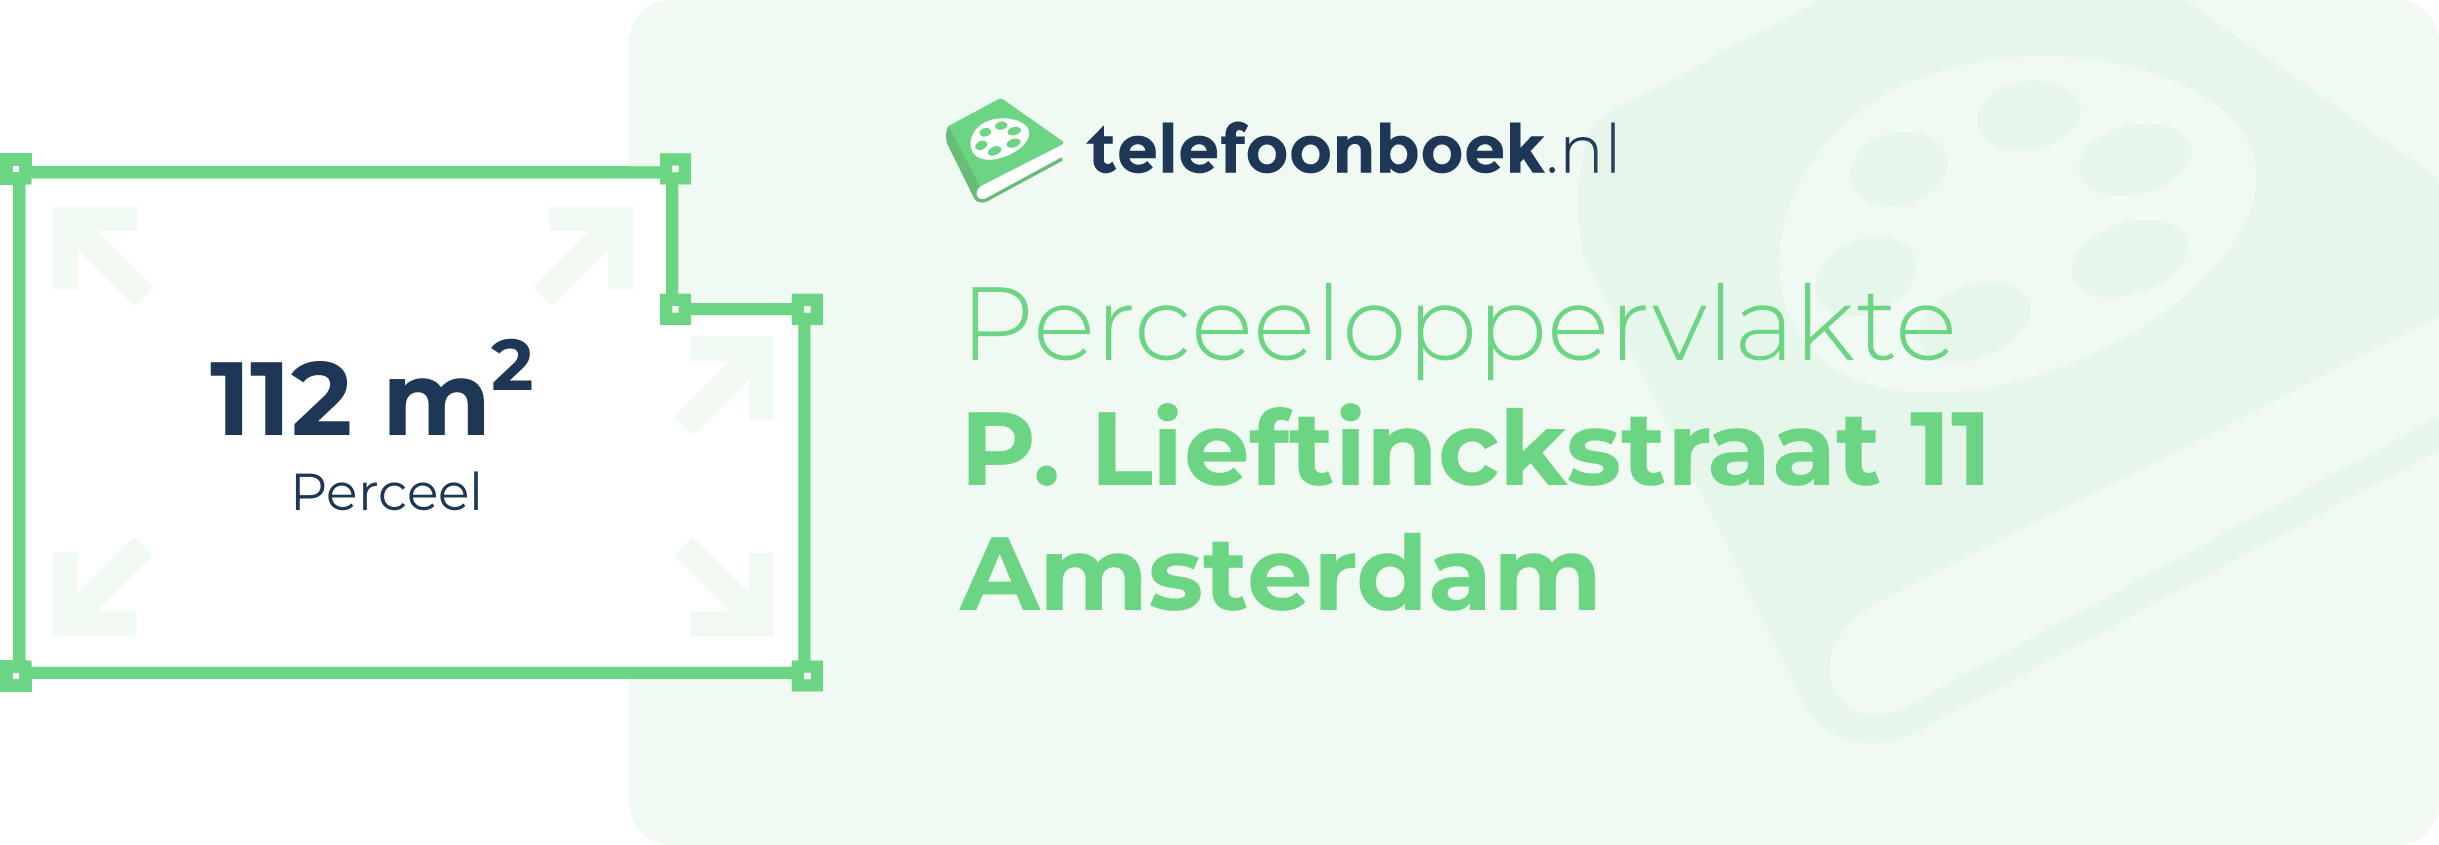 Perceeloppervlakte P. Lieftinckstraat 11 Amsterdam